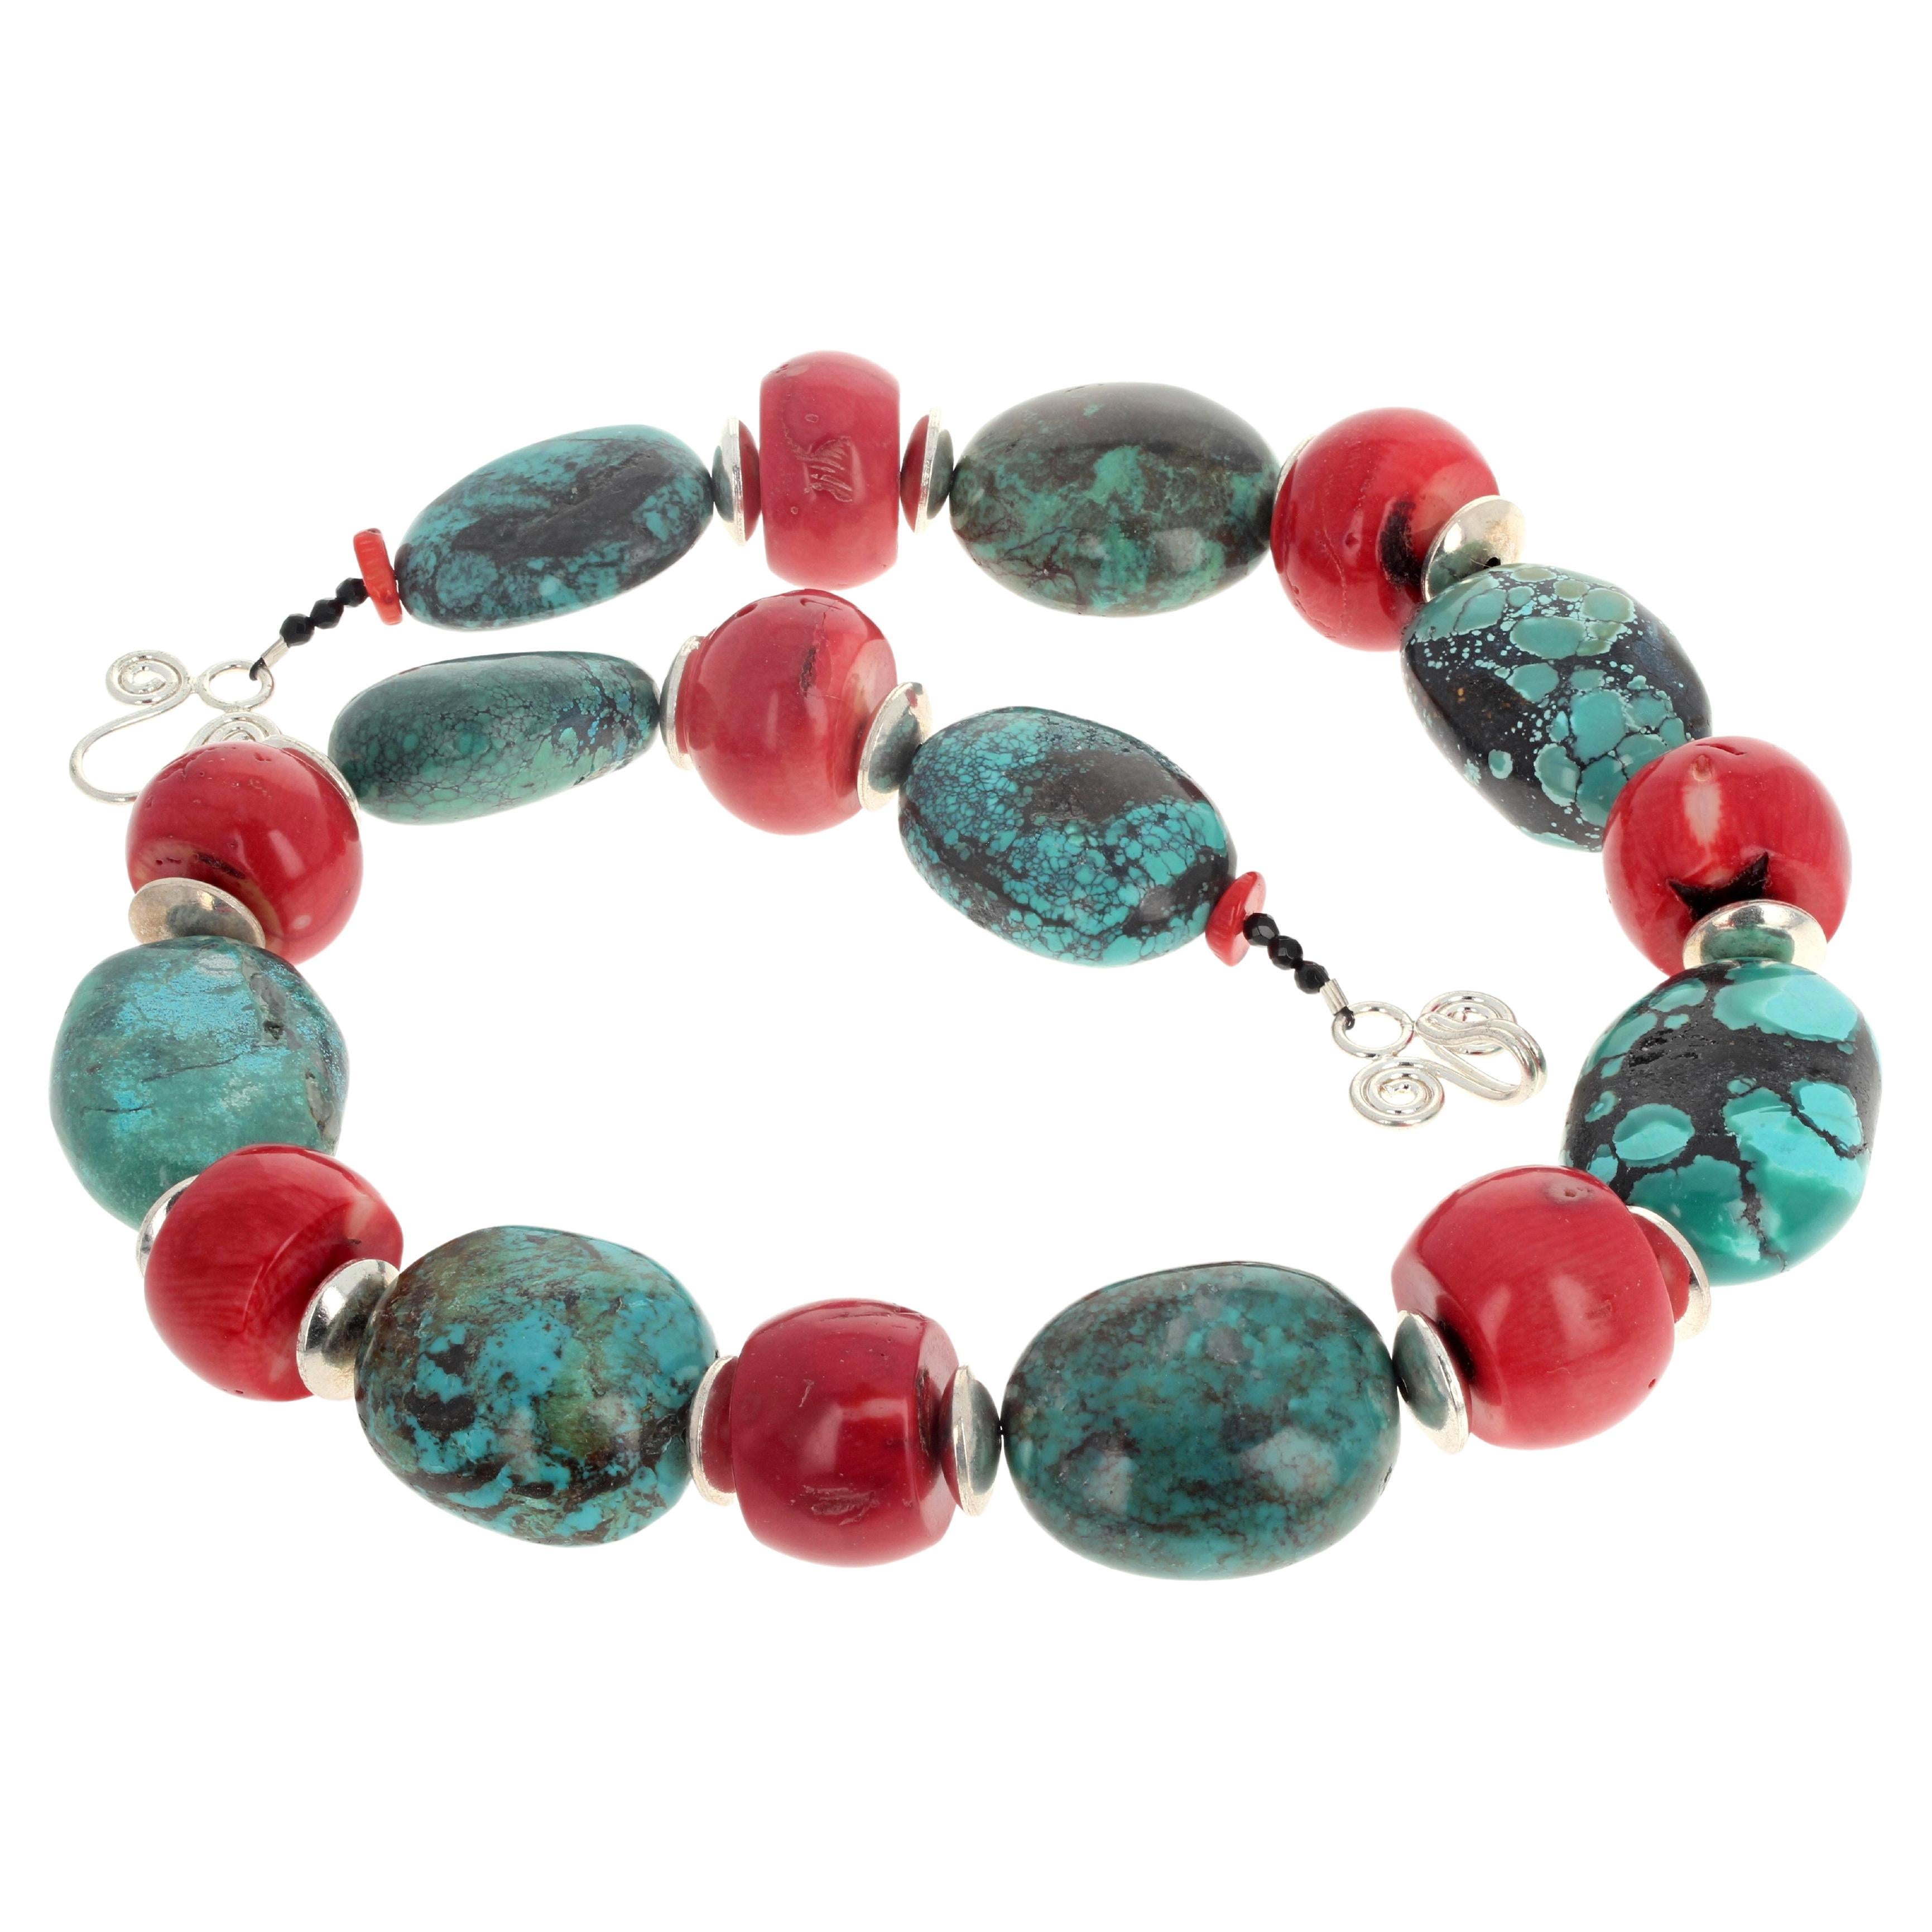 AJD Elegant Strand of Natural Highly Polished Coral & Turquoise Necklace